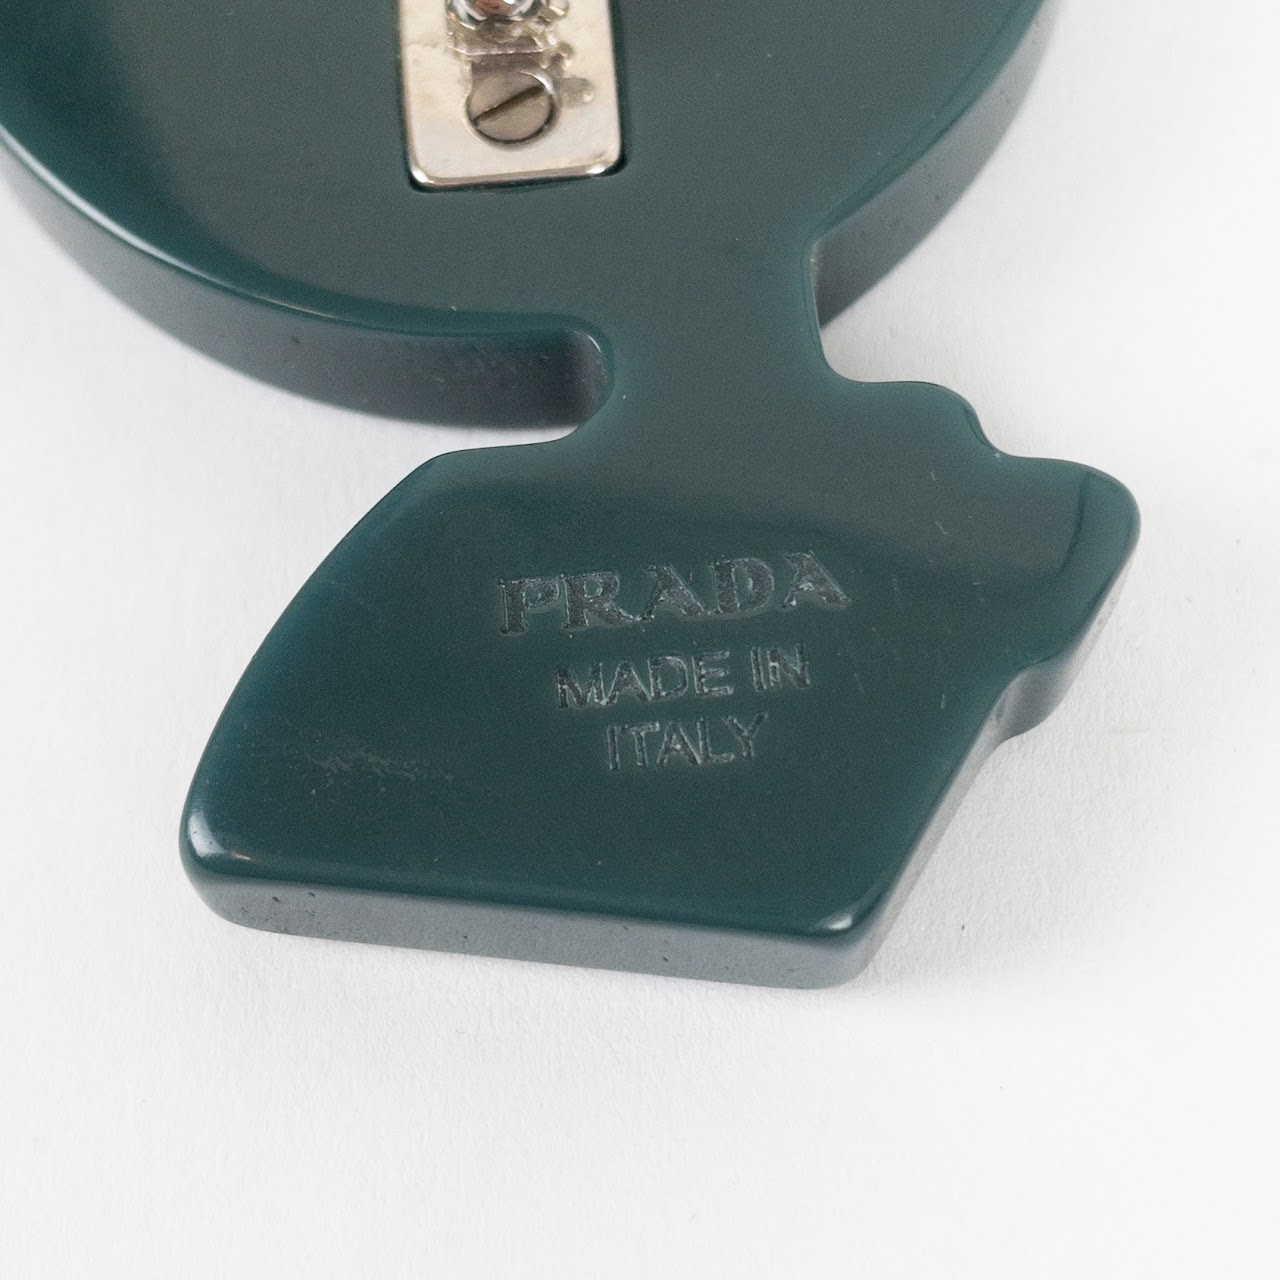 Prada Vintage Electric Fan Brooch